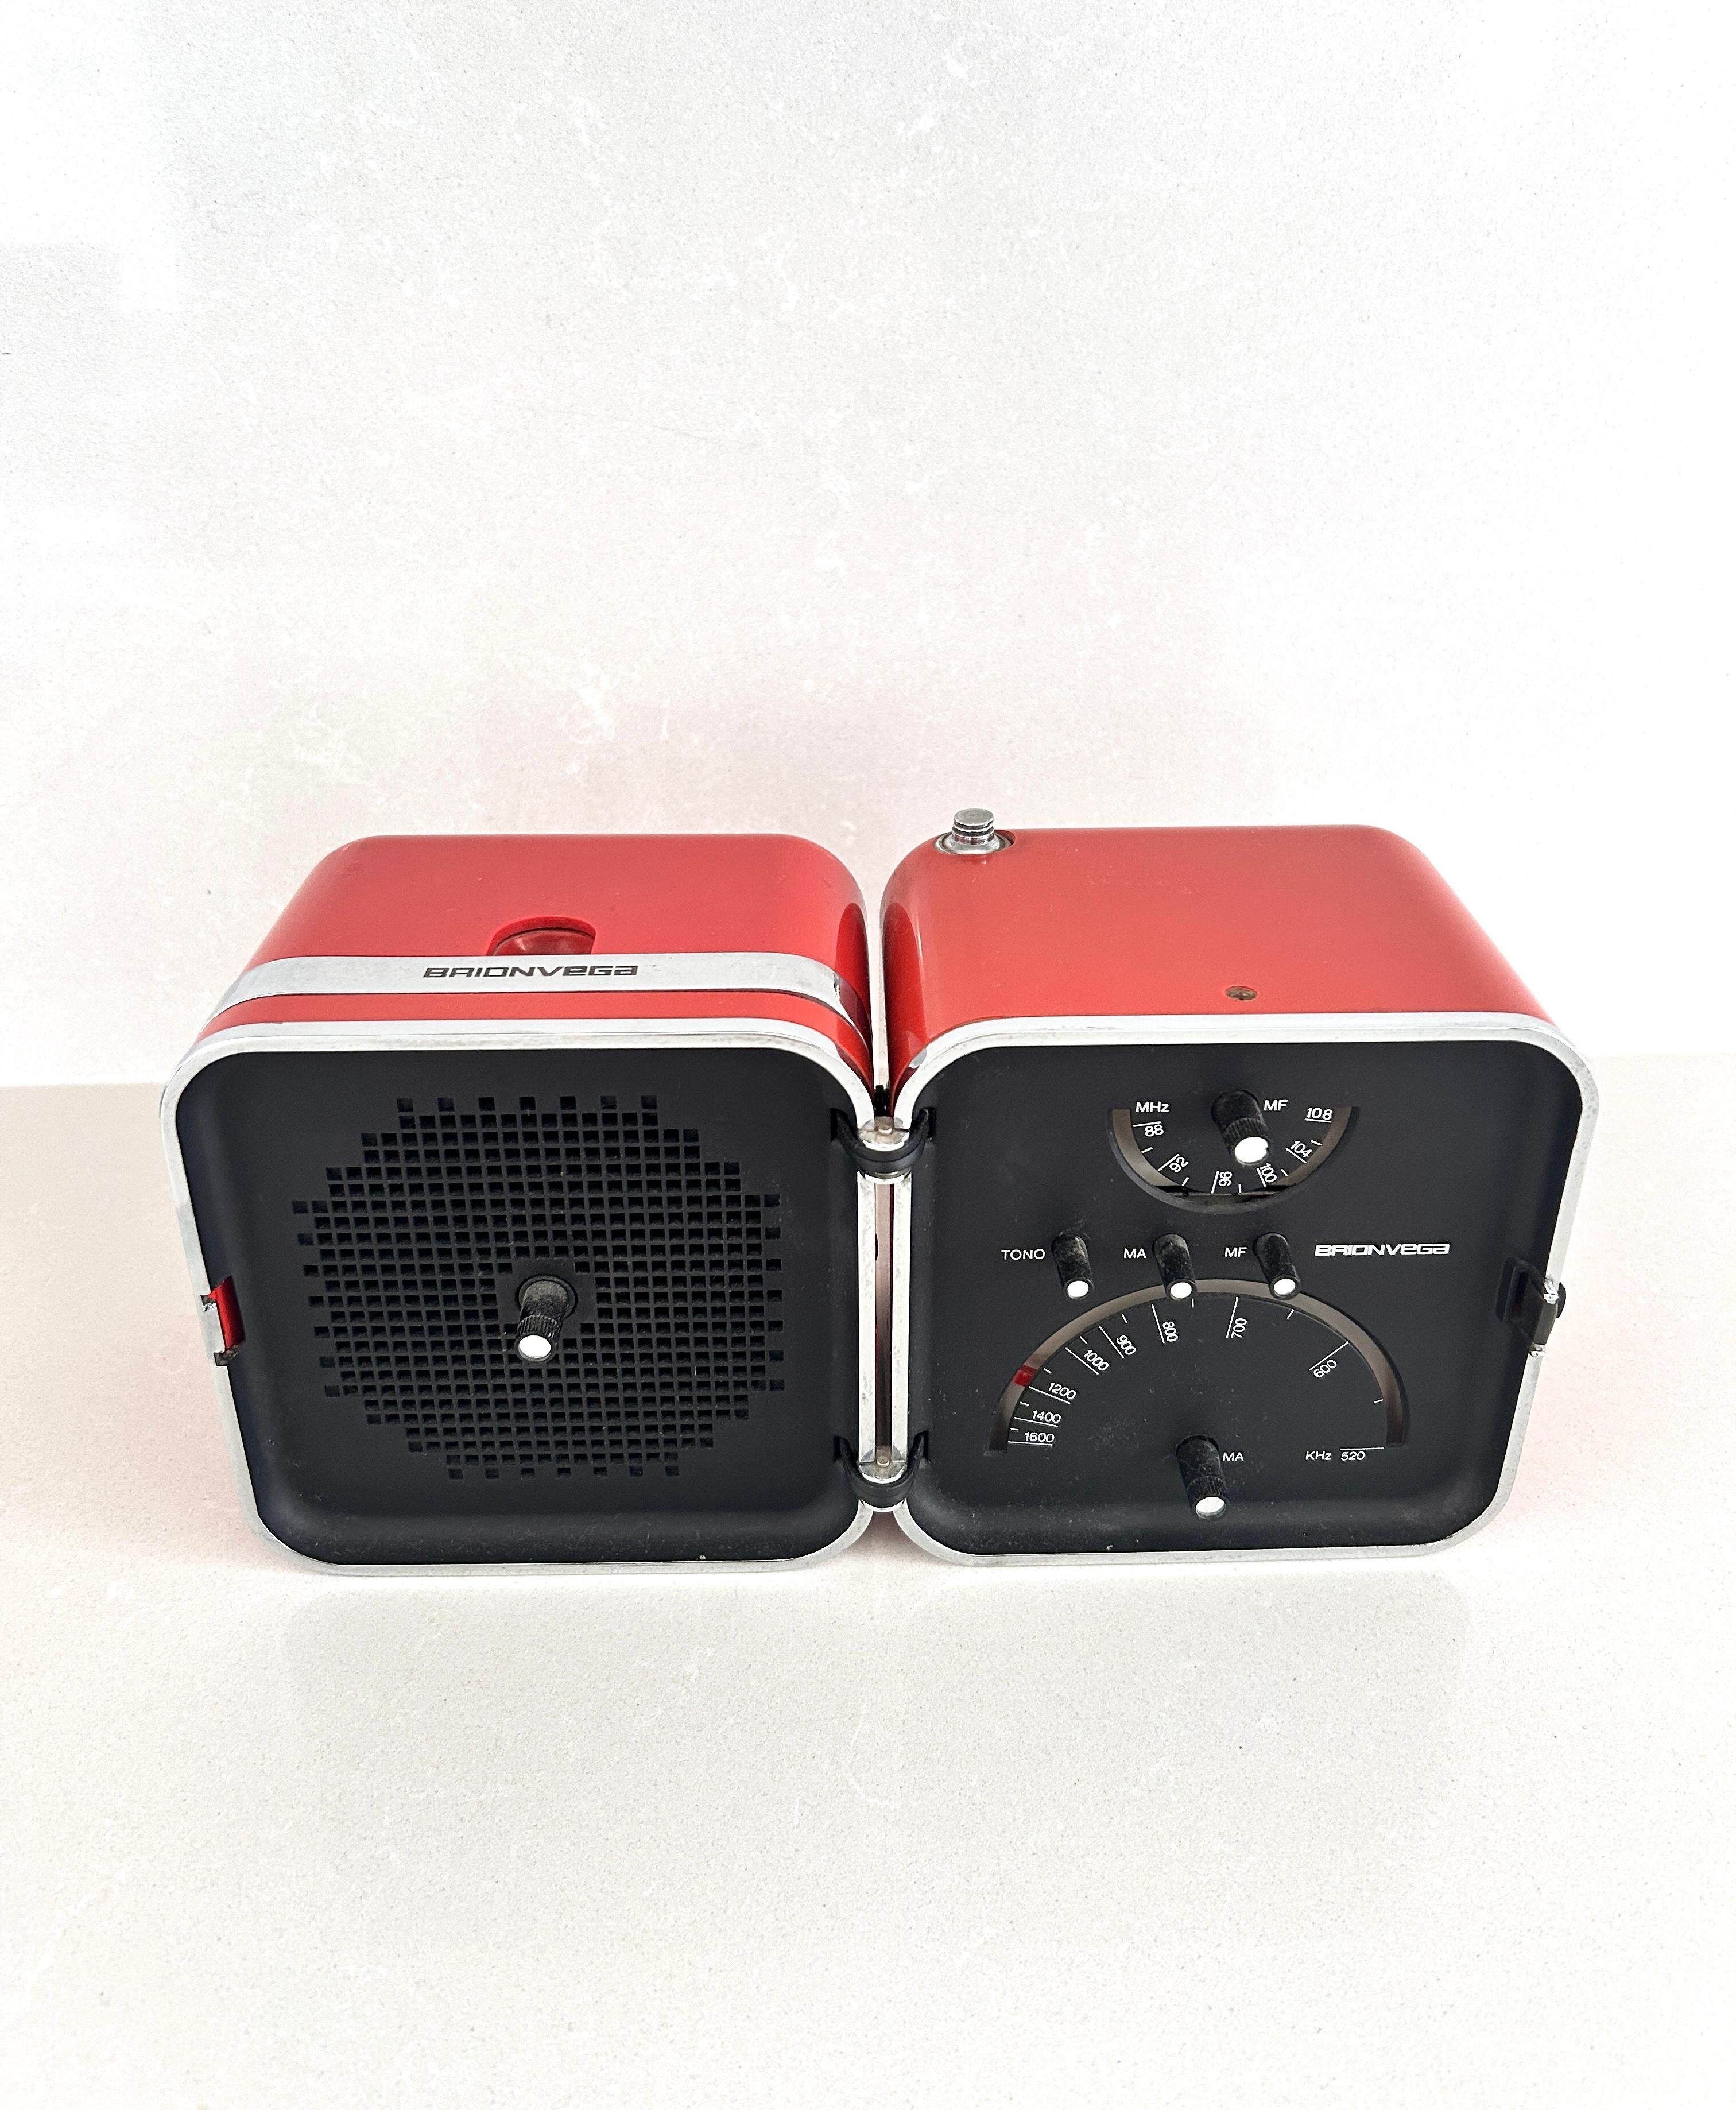 Radio Cube Brionvega mod. TS502, Richard Sapper und Marco Zanuso im Angebot 6